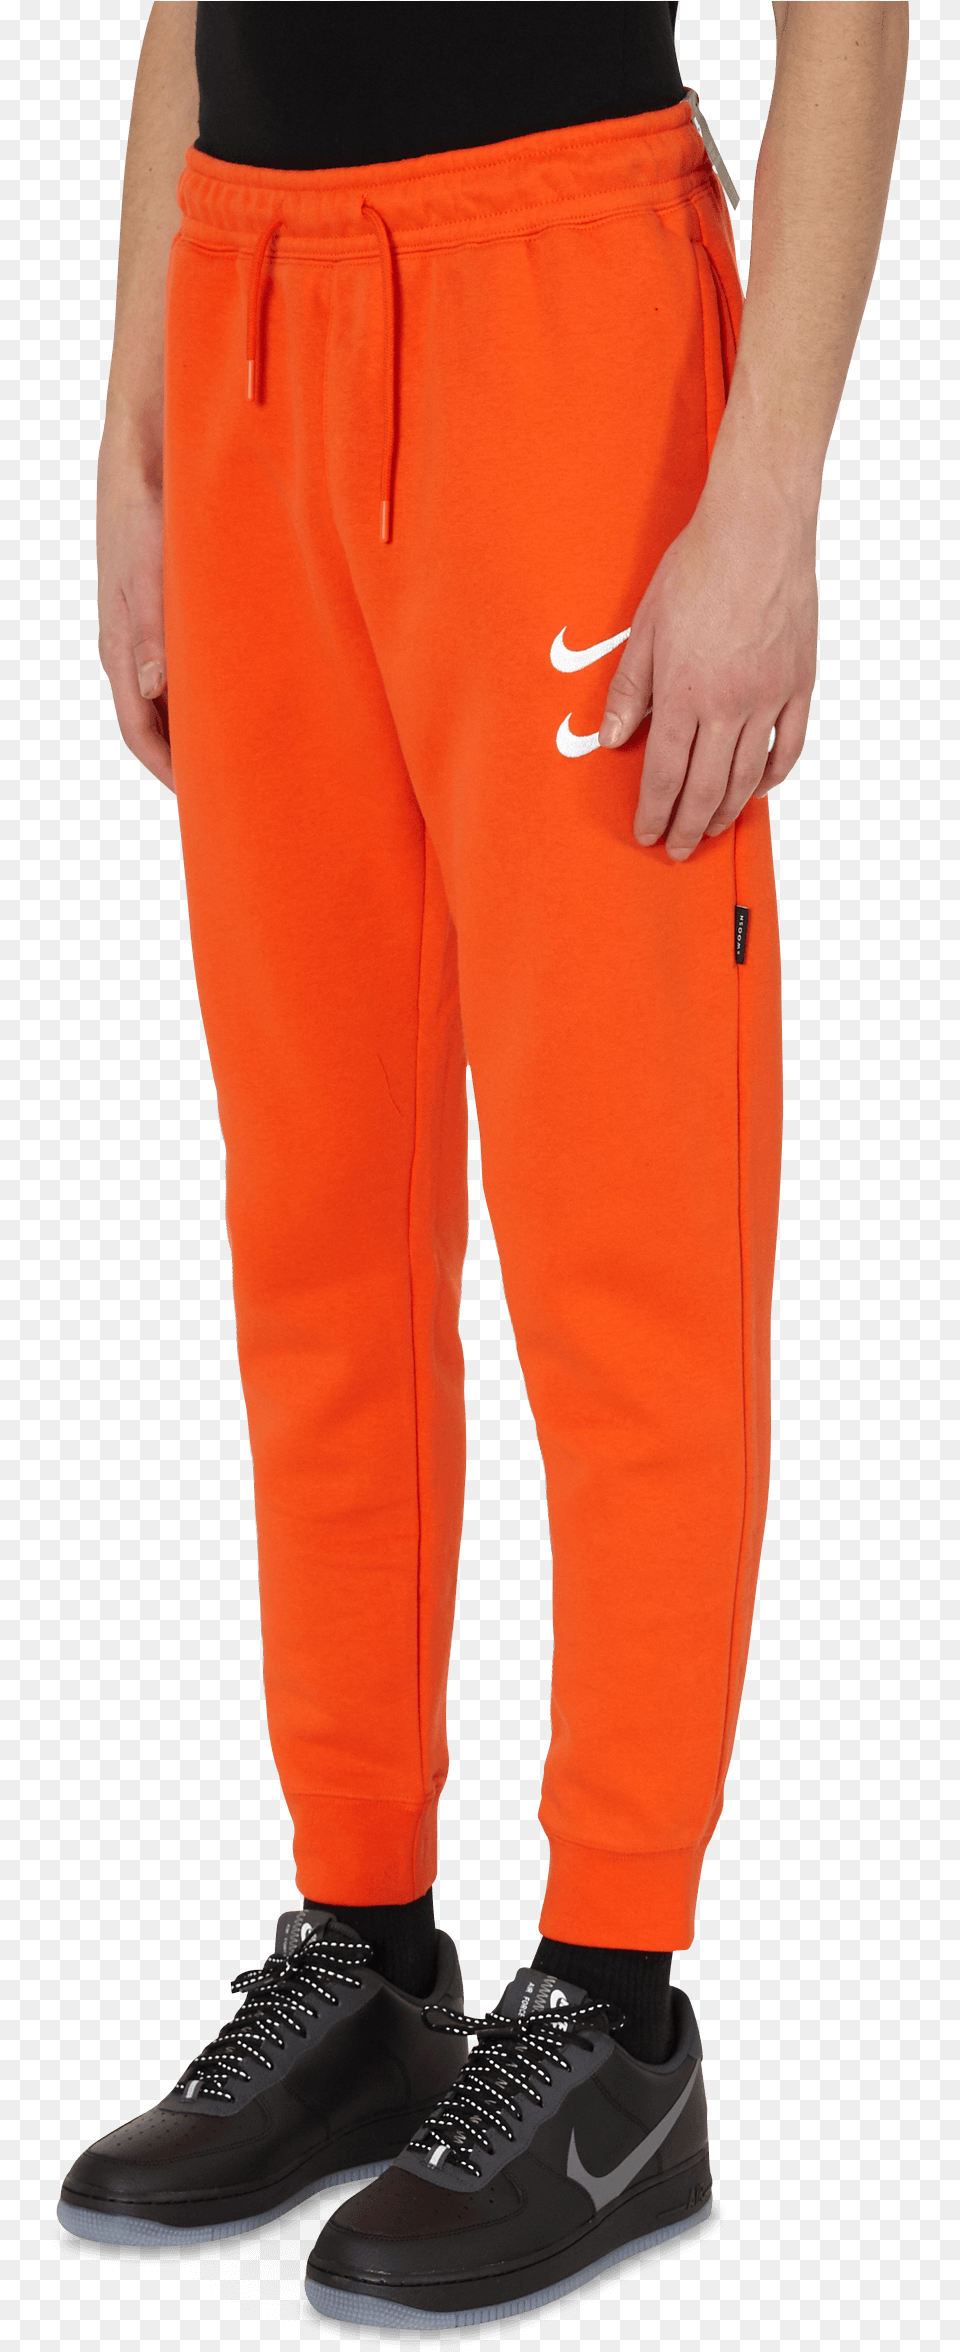 Nike Sportswear Swoosh Pants Nike Swoosh Sweatpants Orange, Clothing, Footwear, Shoe Png